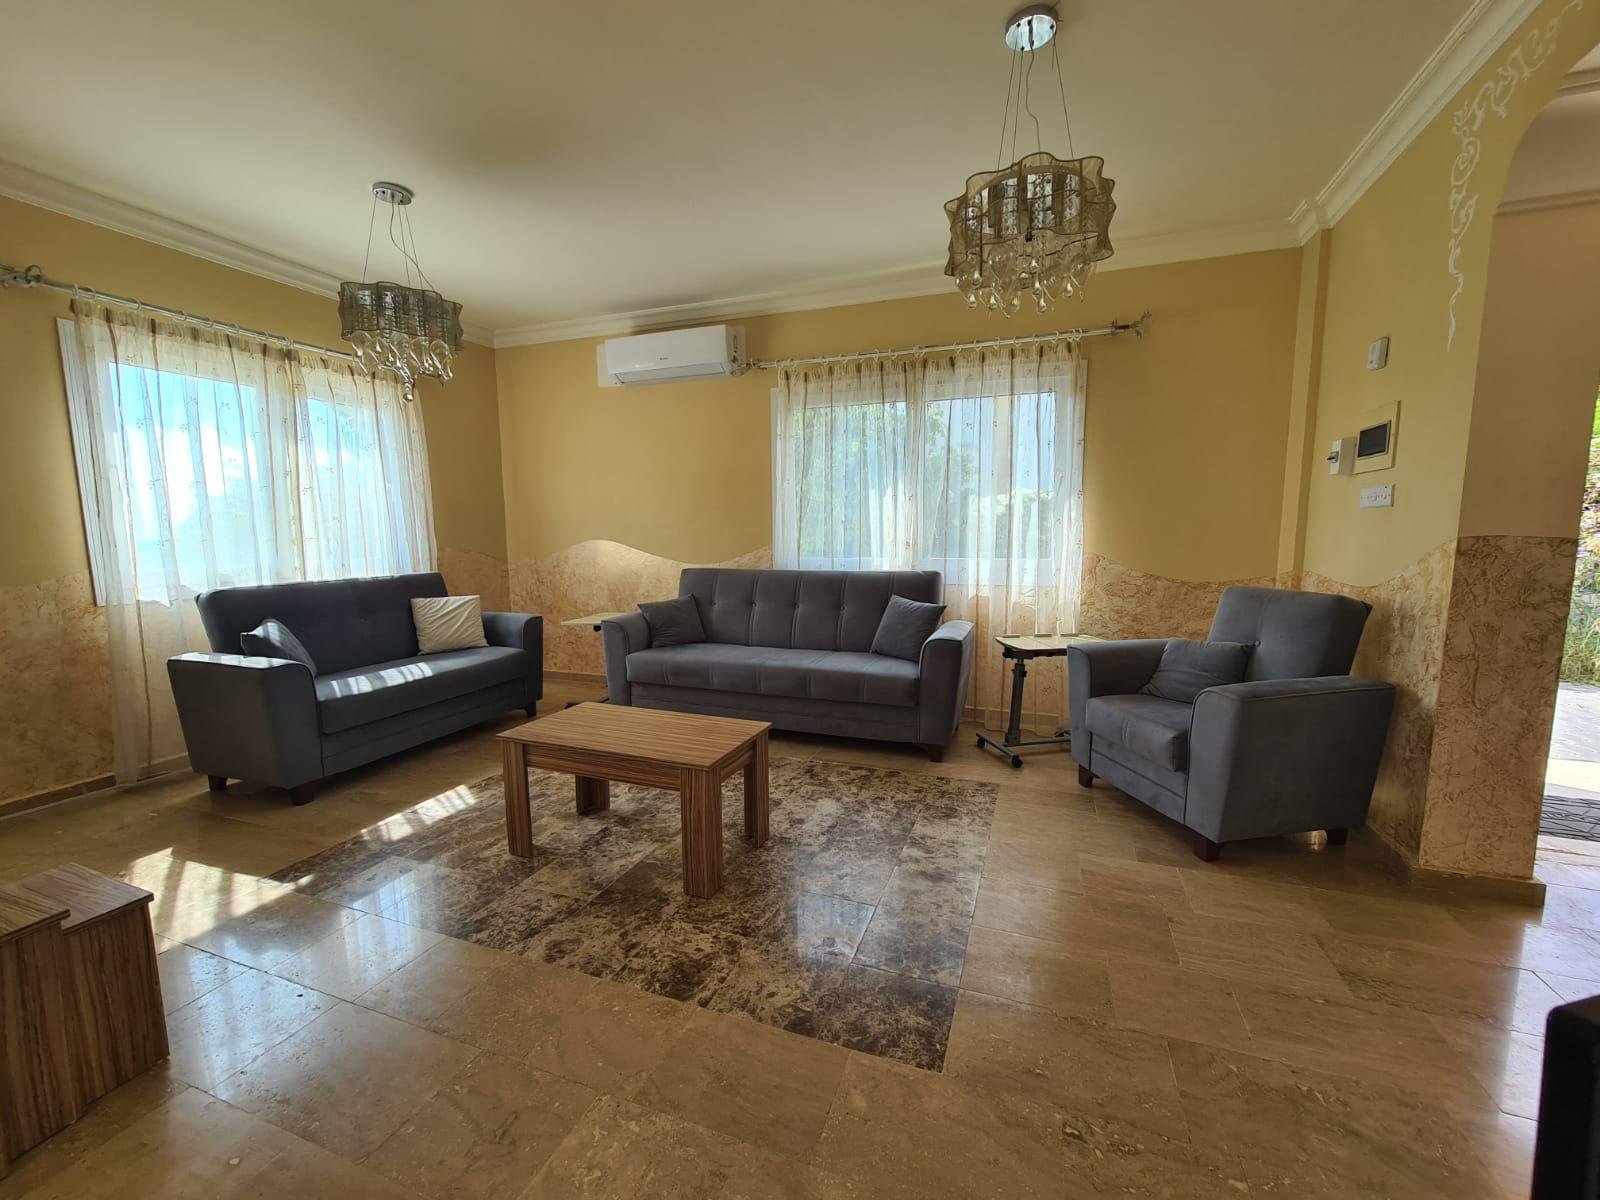 3 bedroom villa for sale in Kyrenia, Karshiyaka-e00f7dda-9df0-4ea4-ae6f-78c1abe7522b